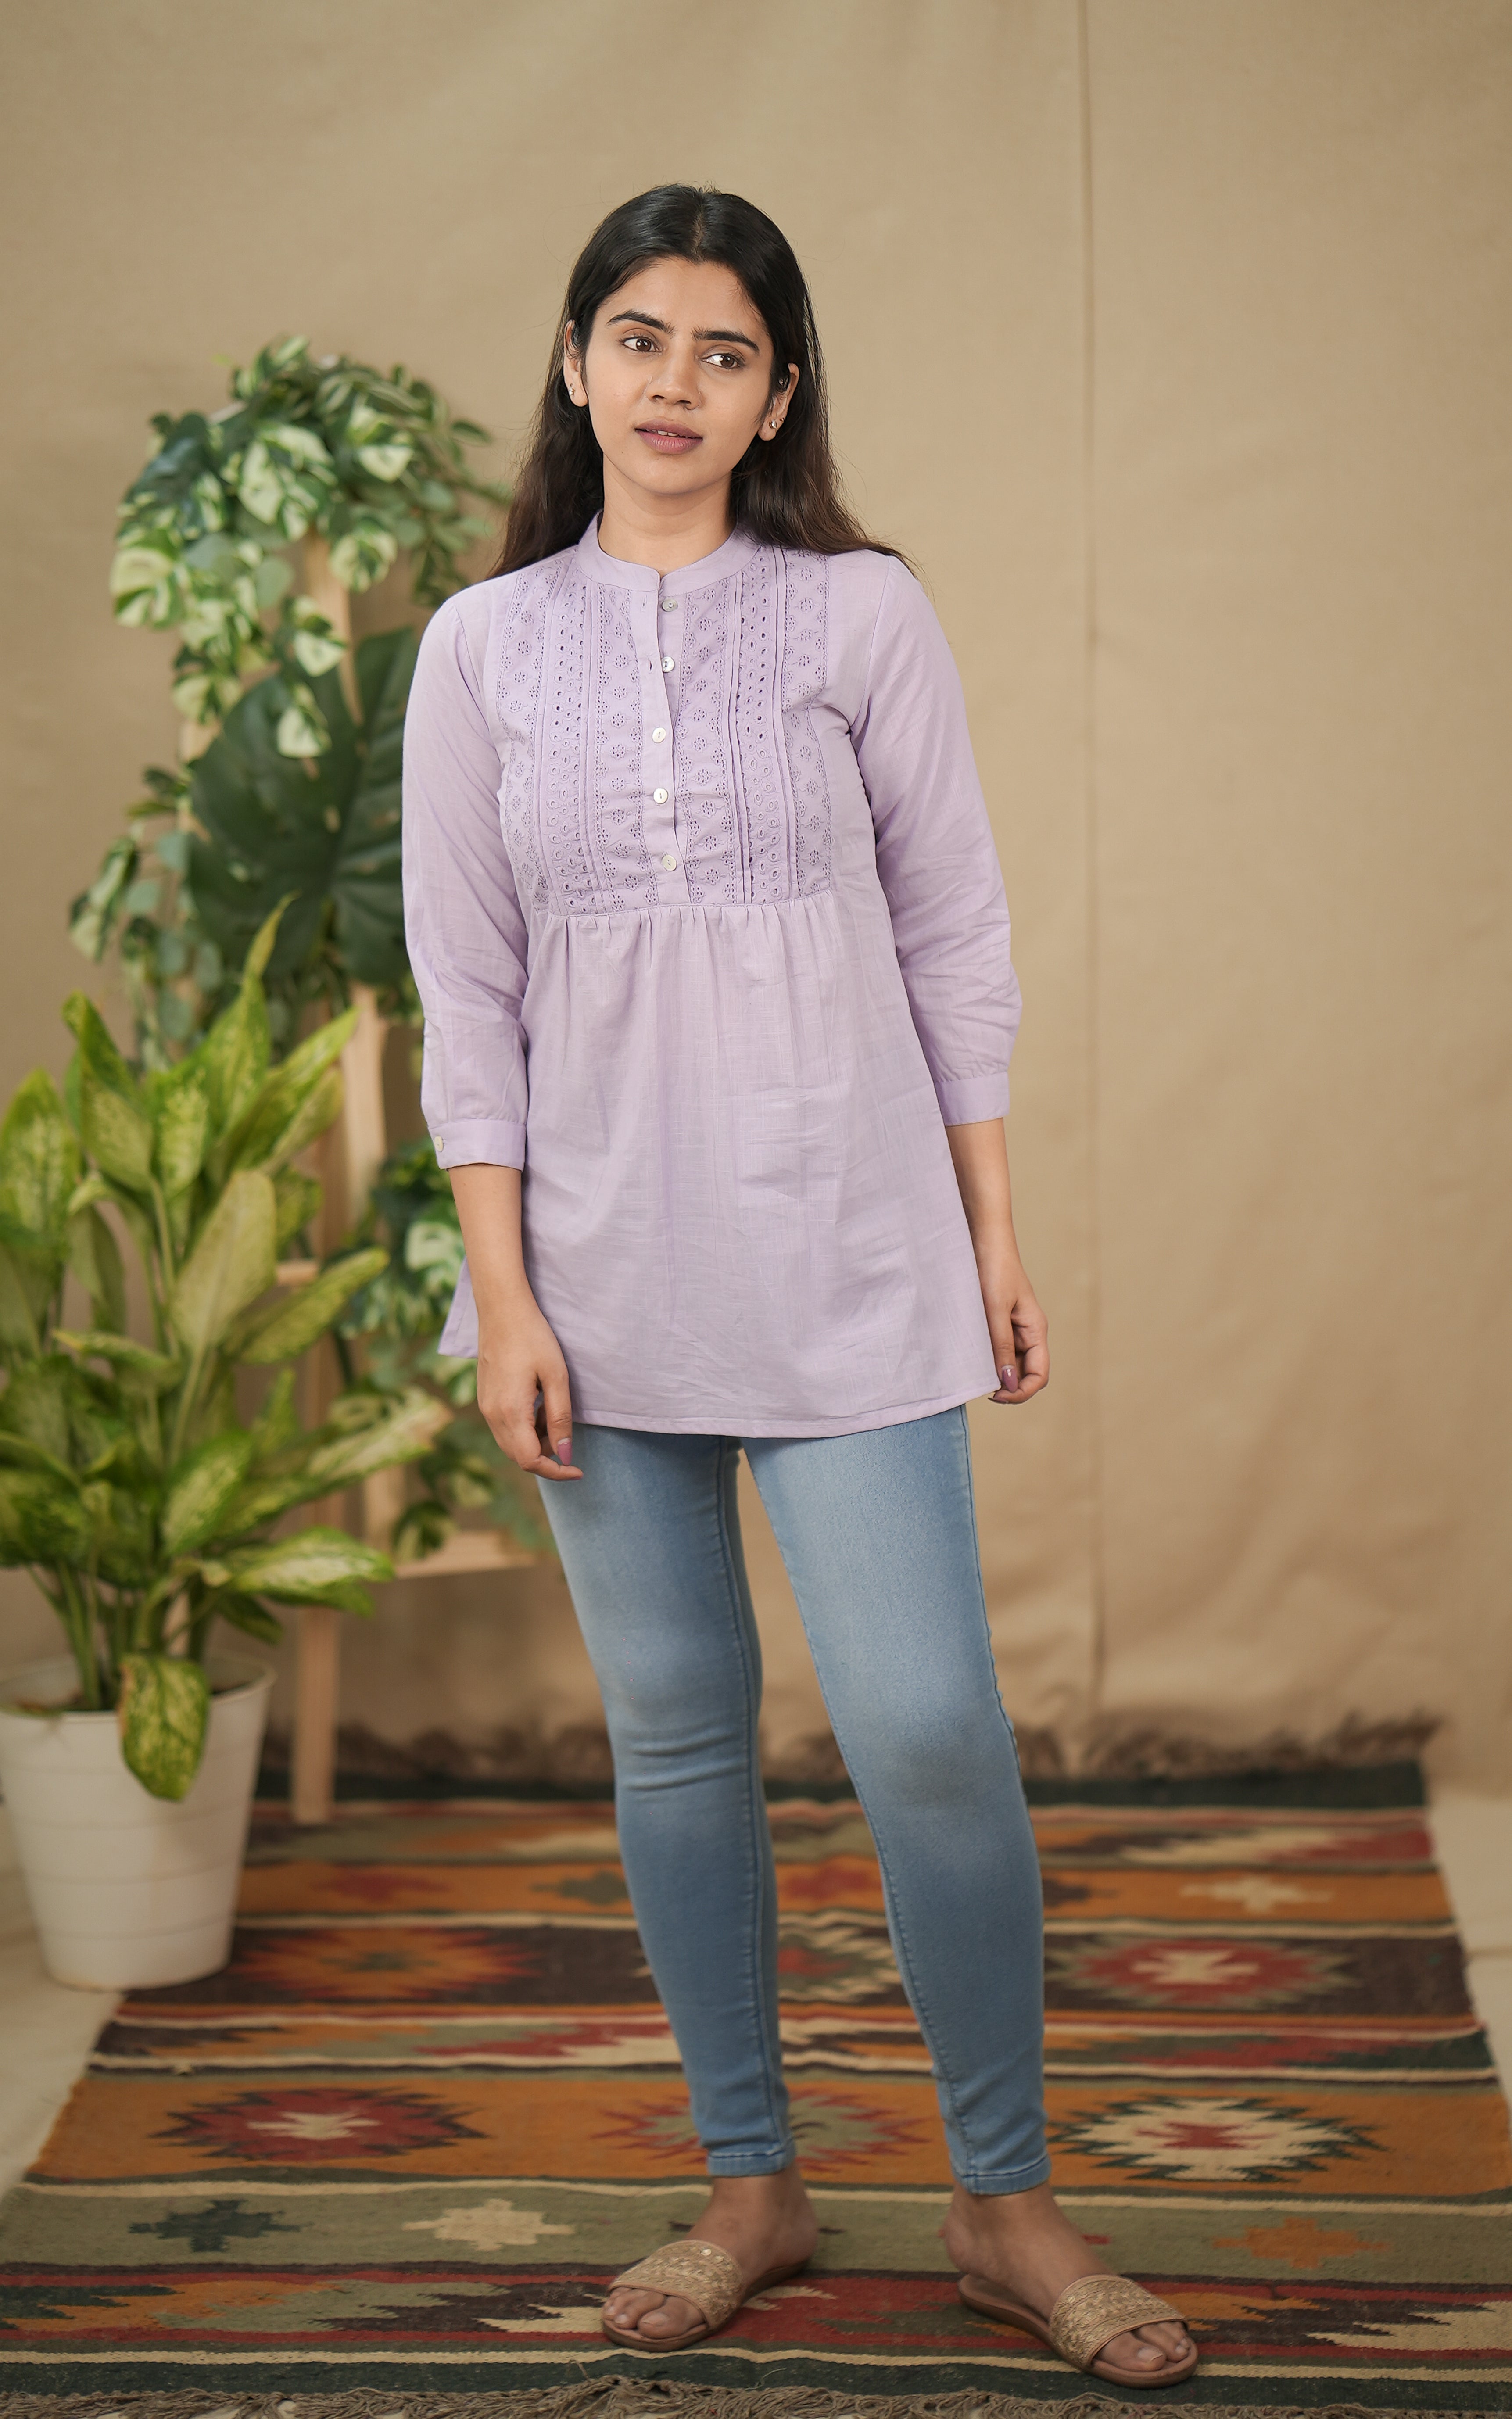 instore kurti office wear foer women soft light weight cotton indo western lavender color kurti 